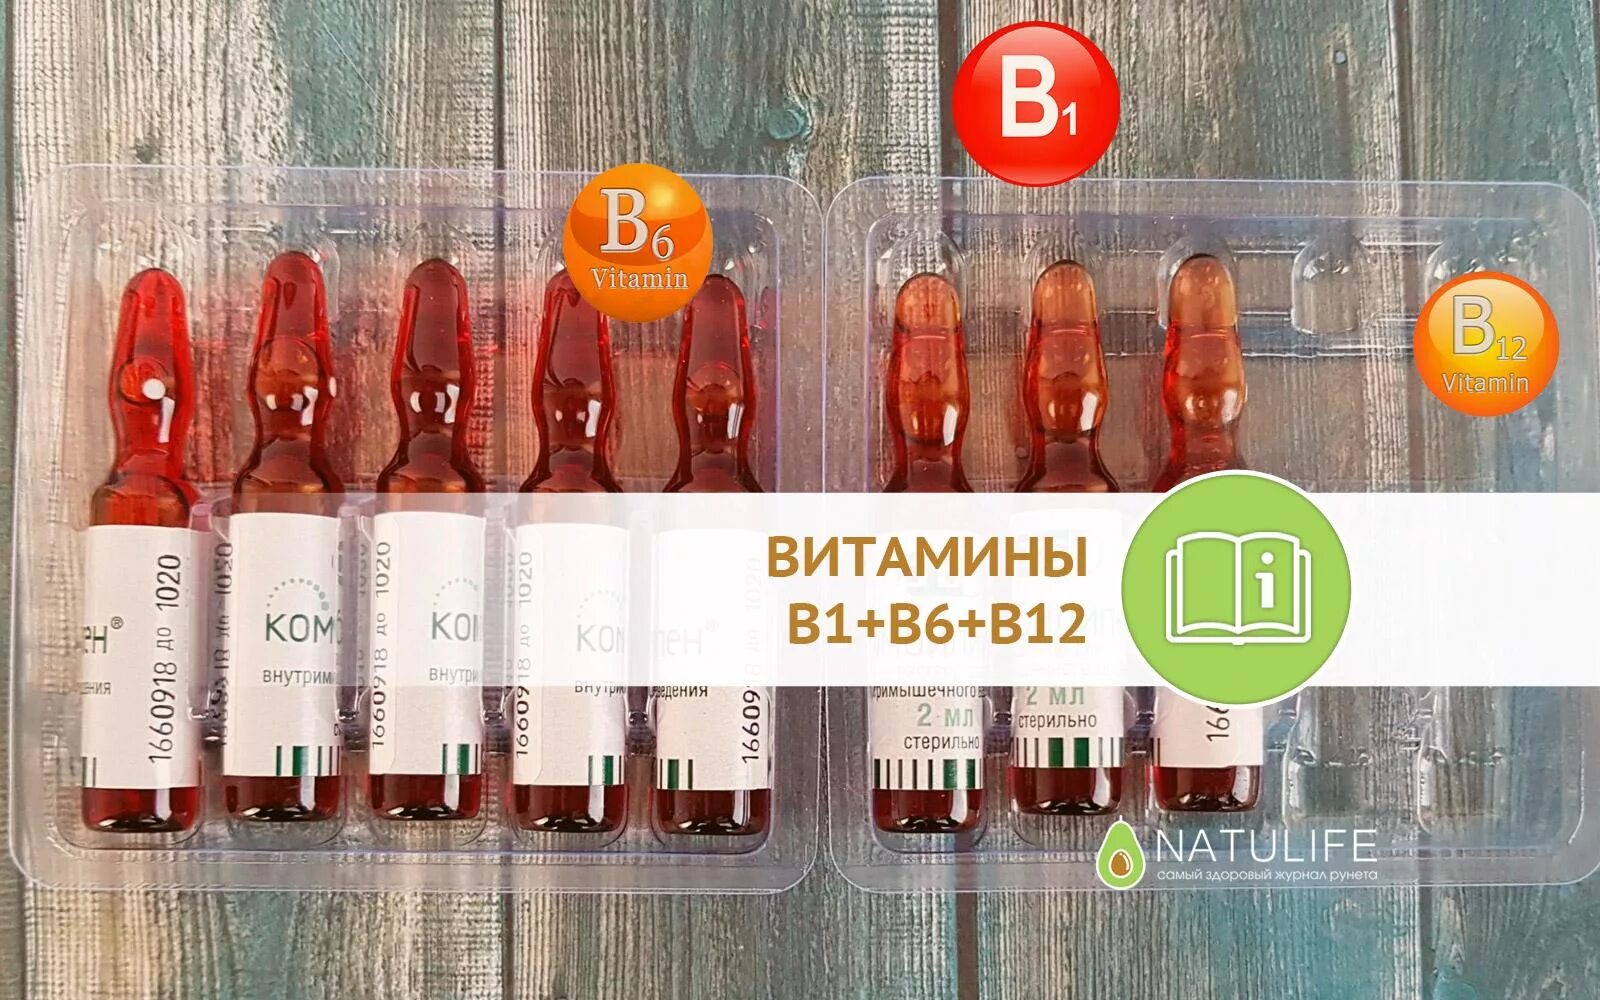 Как колоть б 12. Витамины б1 б6 уколы. Комплекс витаминов б1 б6 б12 в ампулах. B1 b6 b12 витамины в ампулах JN pfgjz. Комплекс б1 б6 б12 уколы витамины.